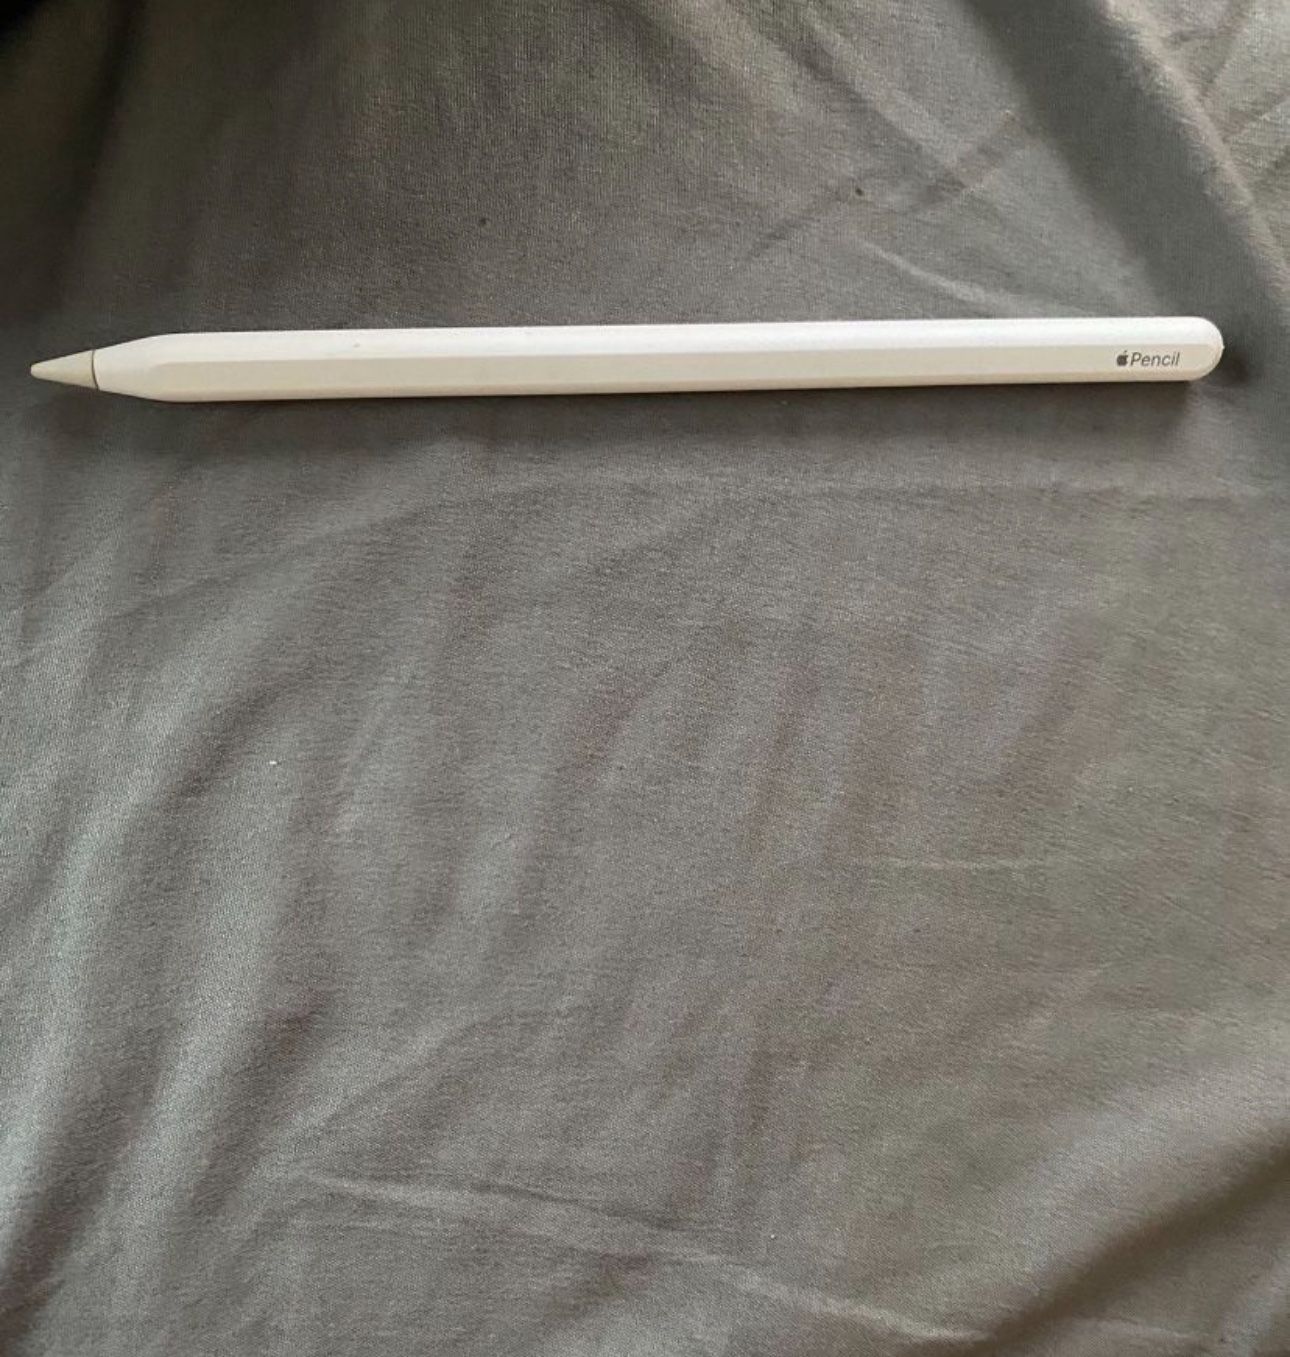 2nd generation Apple Pencil 